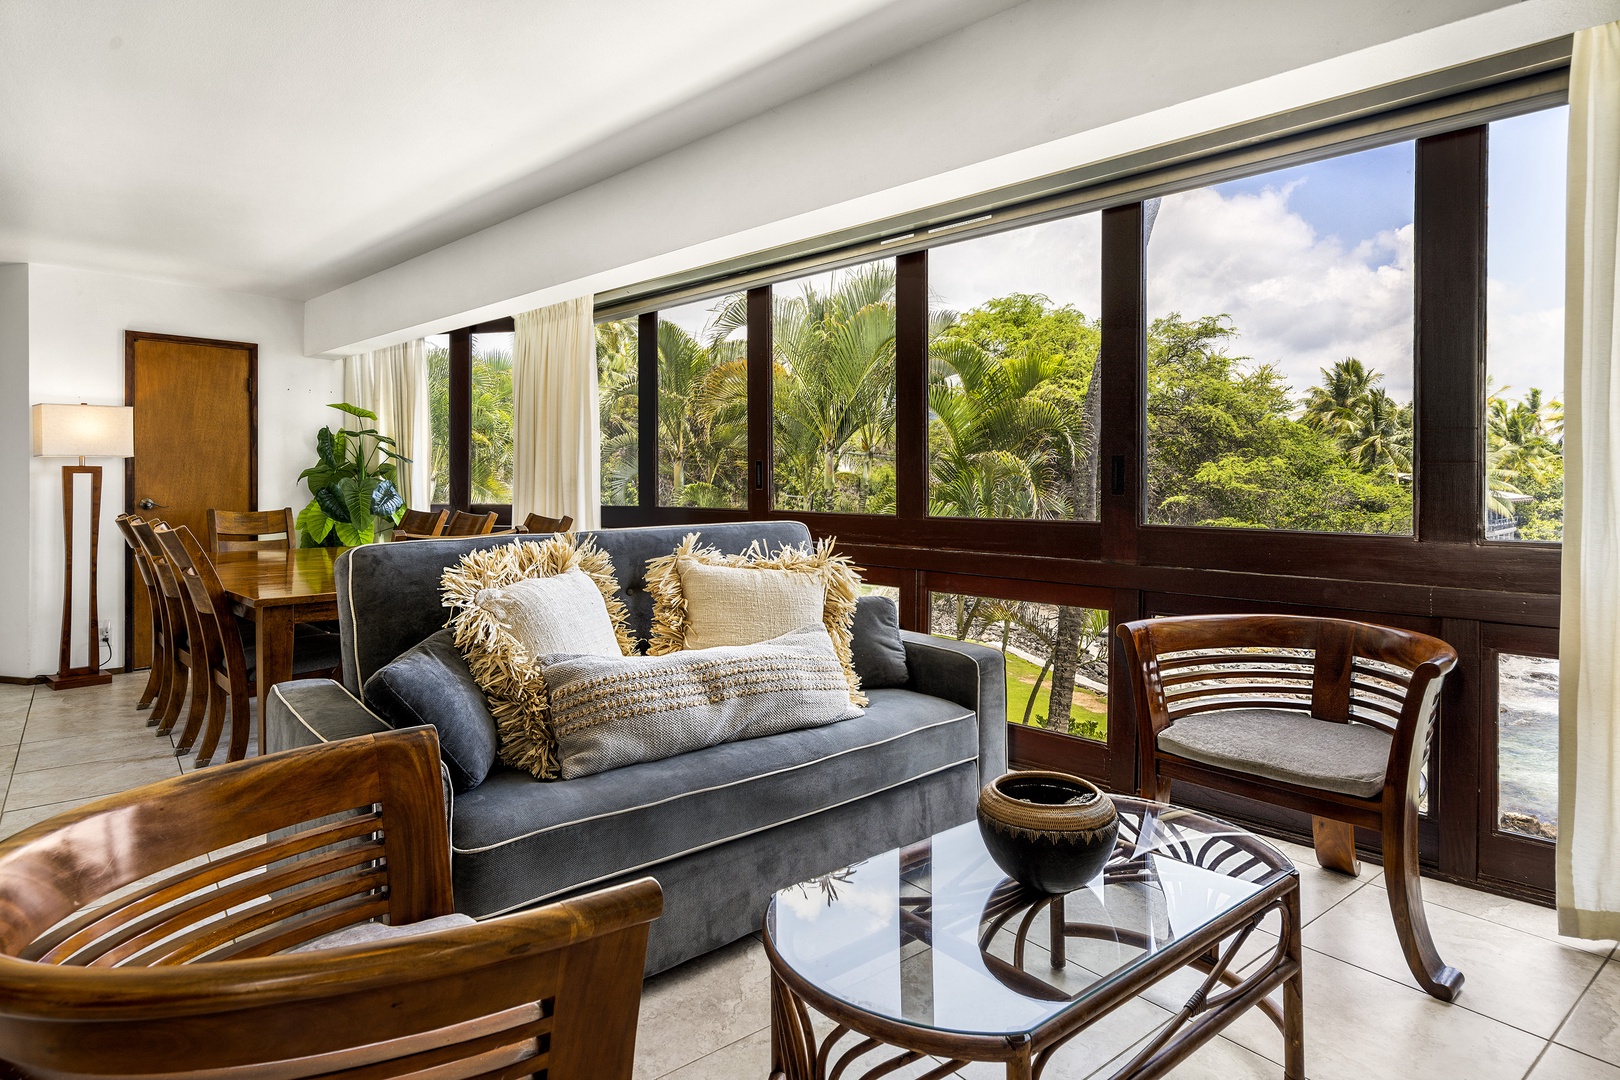 Kailua Kona Vacation Rentals, Kona's Shangri La - Second floor living room with Double sized sleeper sofa